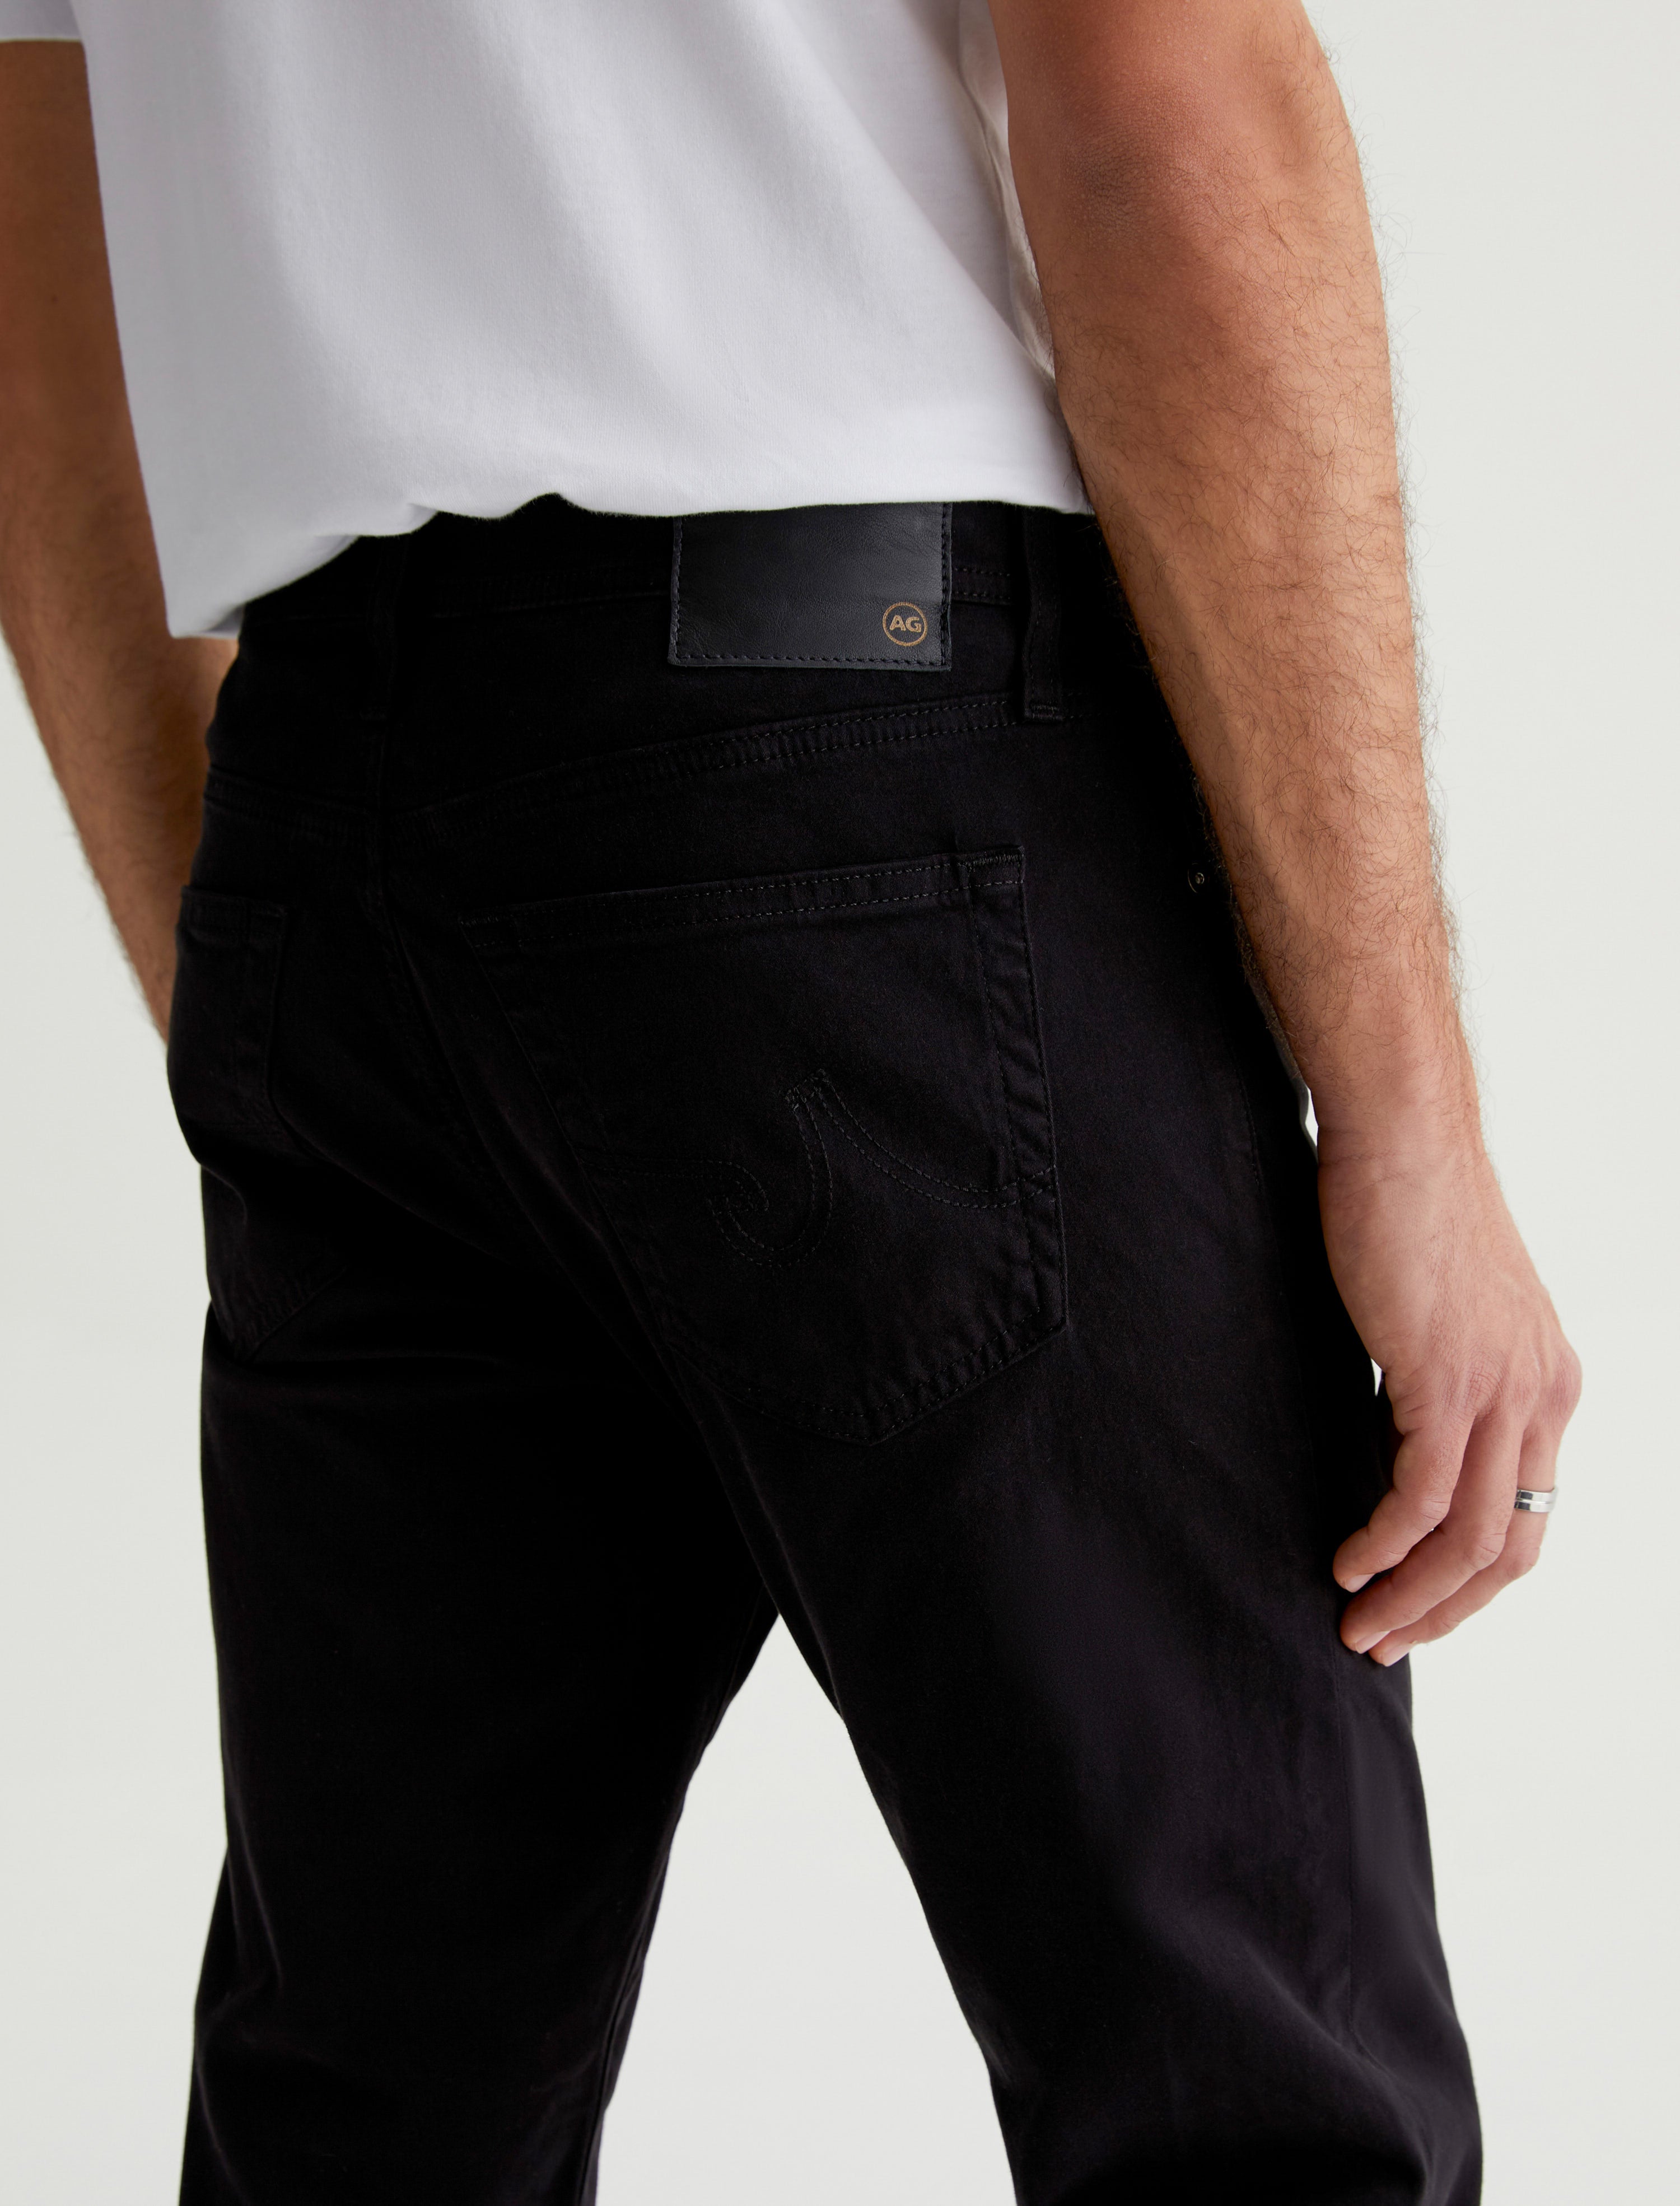 Buy United Denim Men Black Slim FIT Jeans with Free UD52 Belt (28, Black)  at Amazon.in